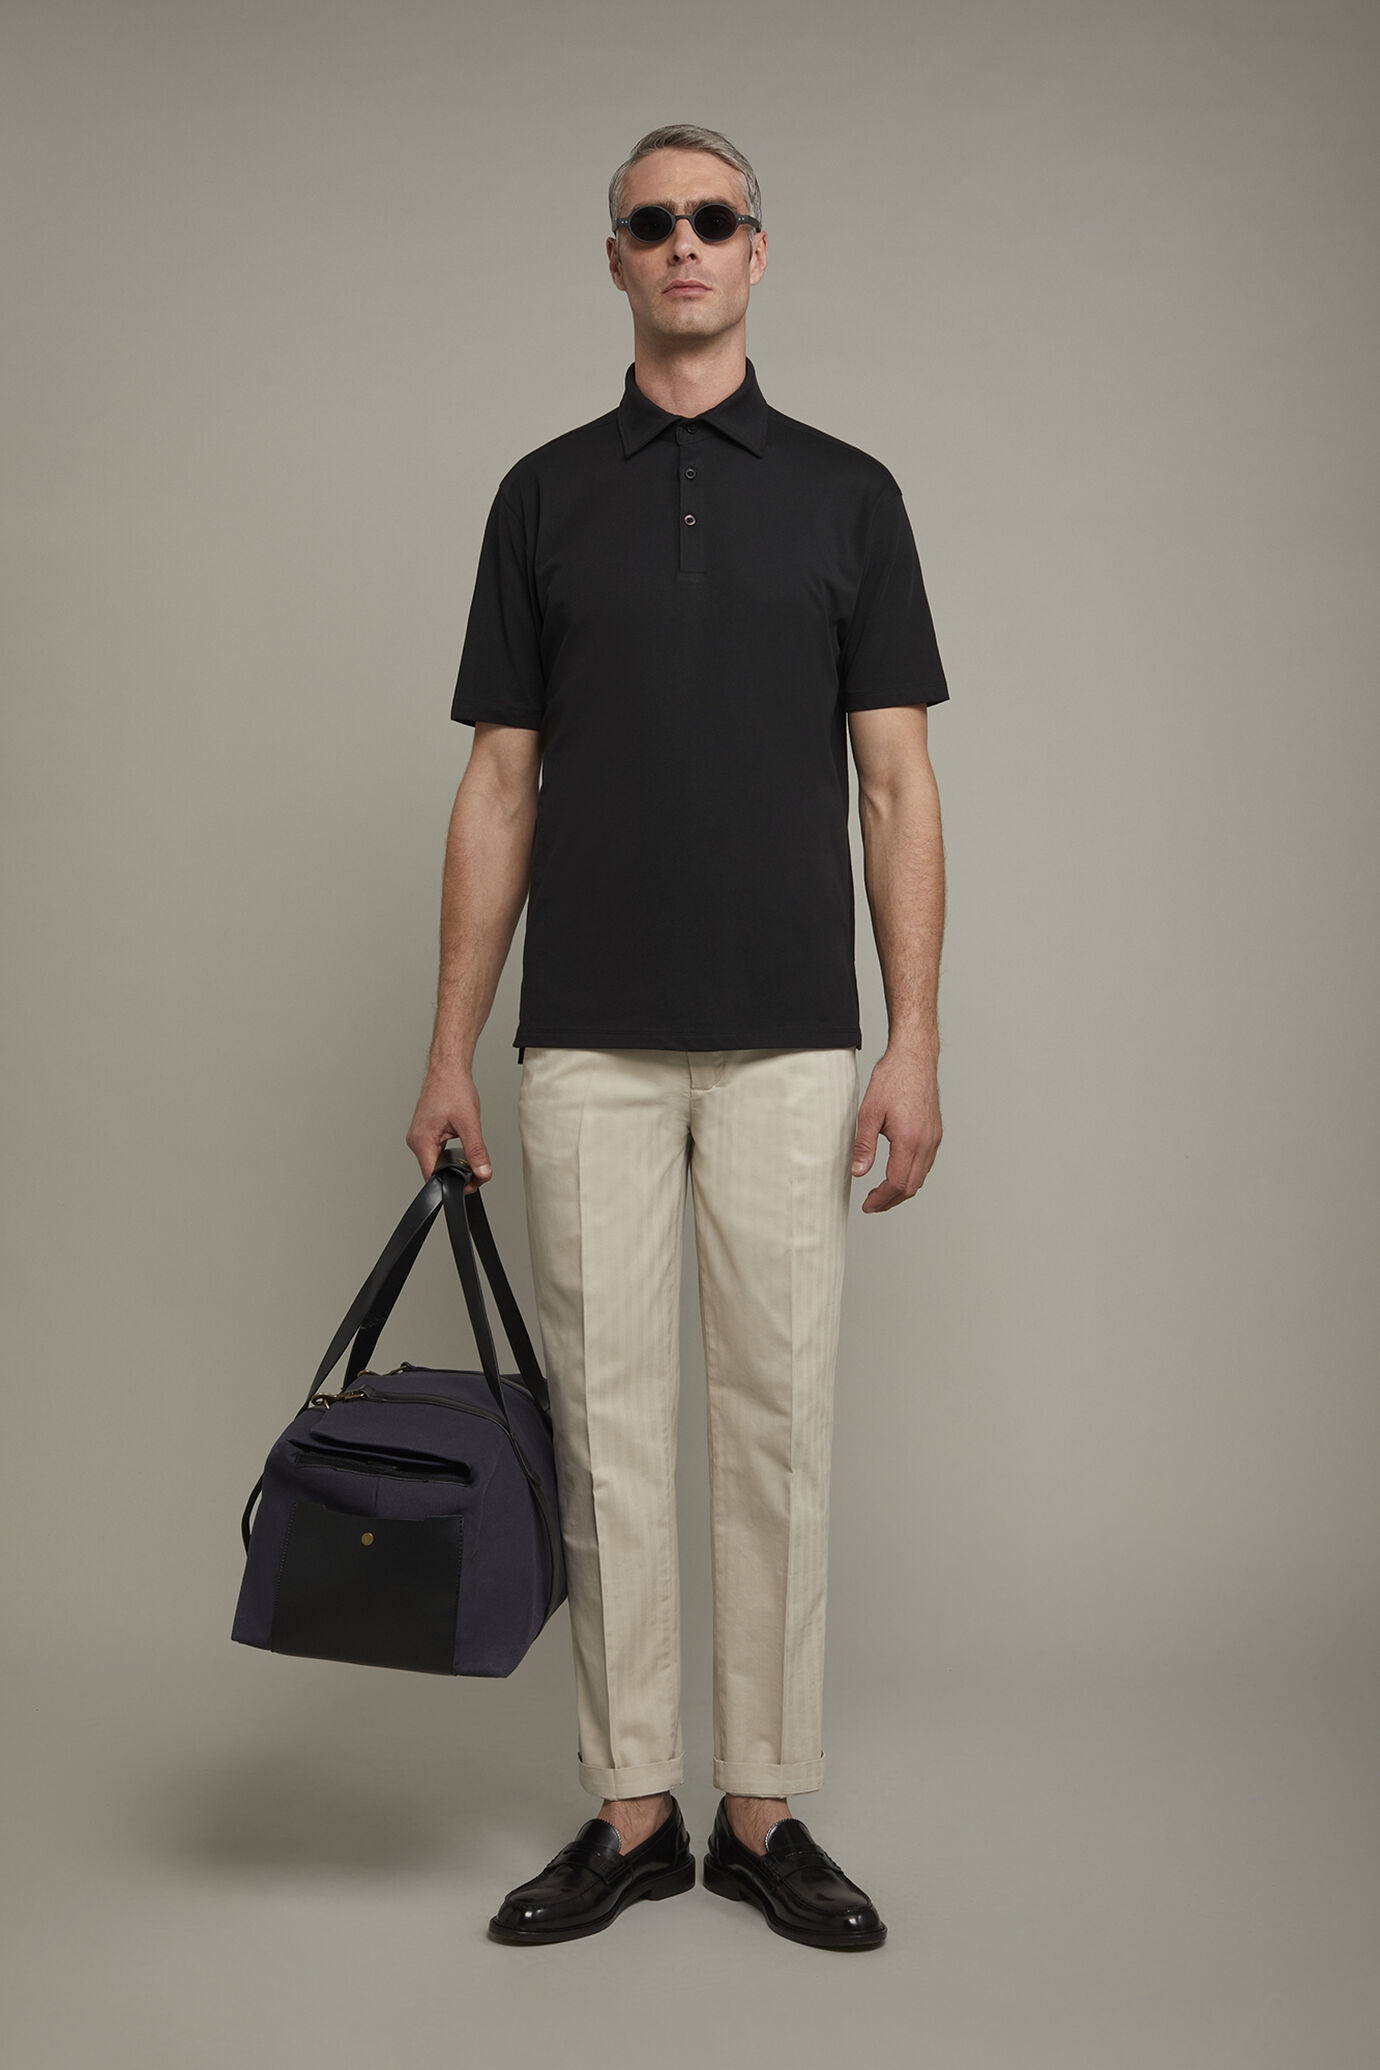 Kurzärmeliges Herren-Poloshirt aus 100 % Supima-Baumwolle in normaler Passform